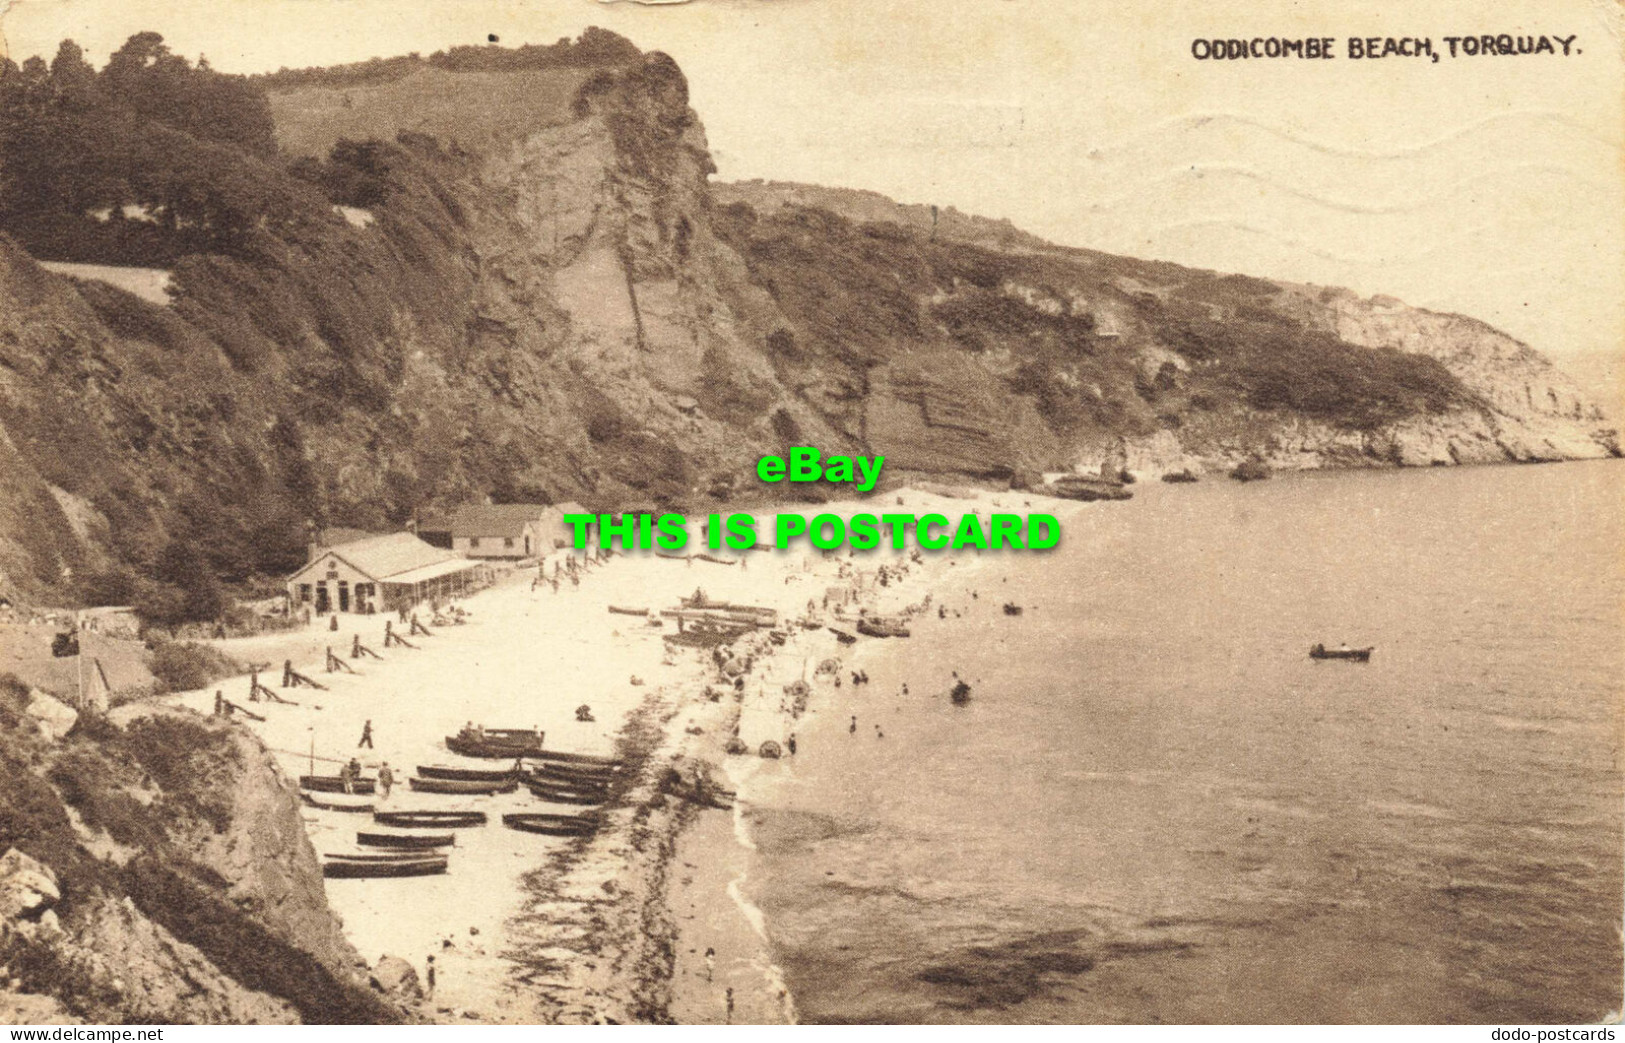 R569113 Oddicombe Beach. Torquay. P. Coves Library. 1925 - World